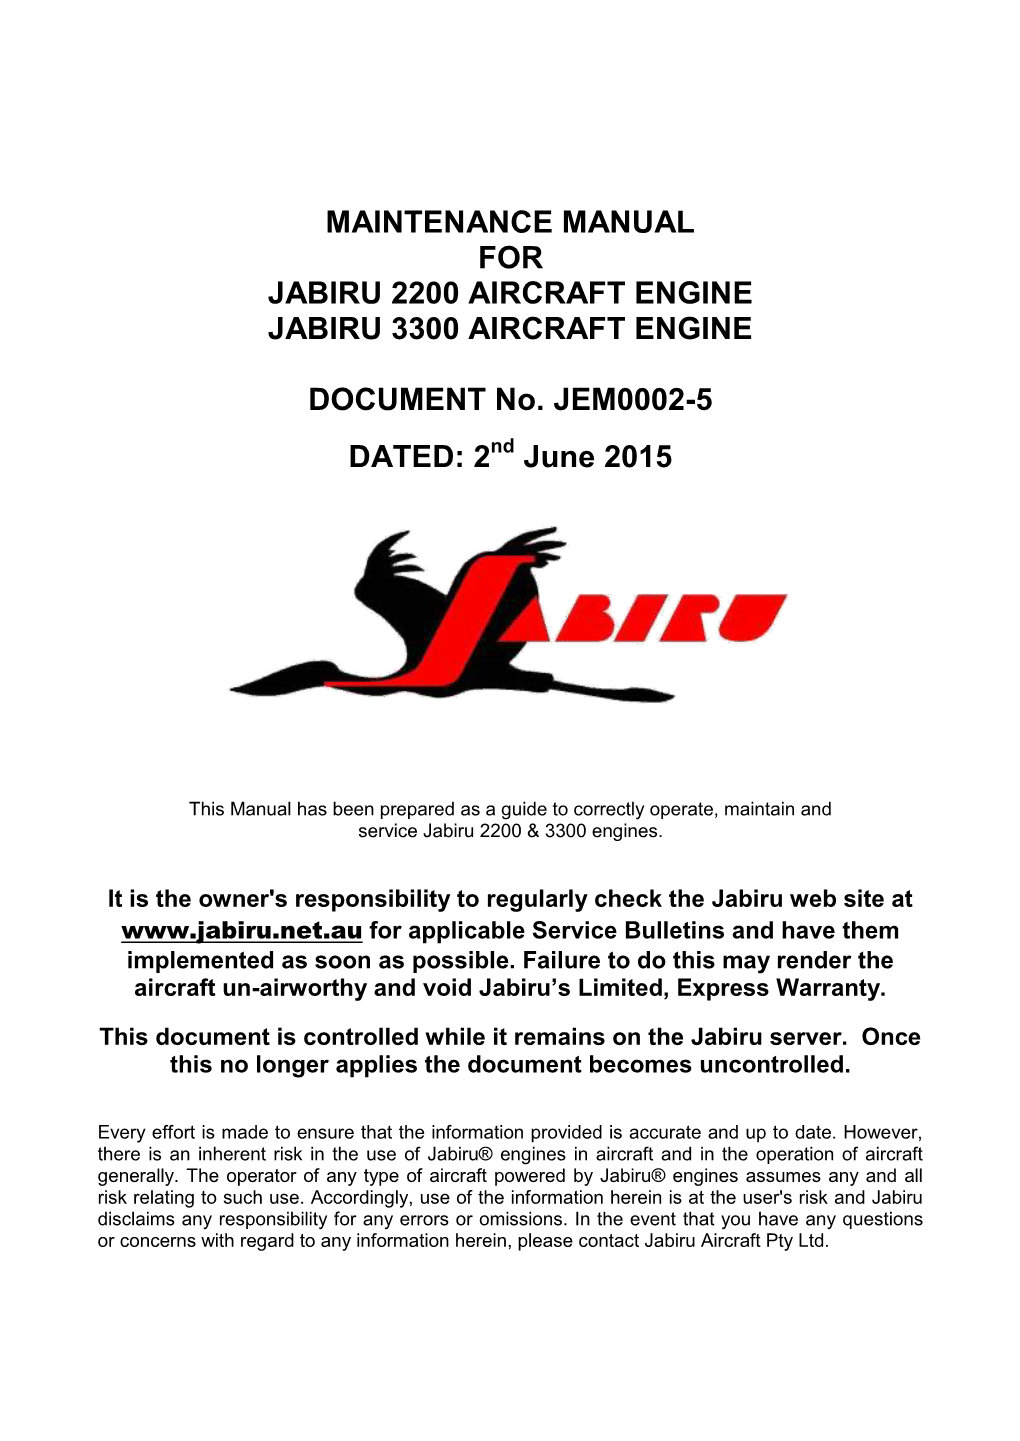 MAINTENANCE MANUAL for JABIRU 2200 AIRCRAFT ENGINE JABIRU 3300 AIRCRAFT ENGINE DOCUMENT No. JEM0002-5 DATED: 2 June 2015